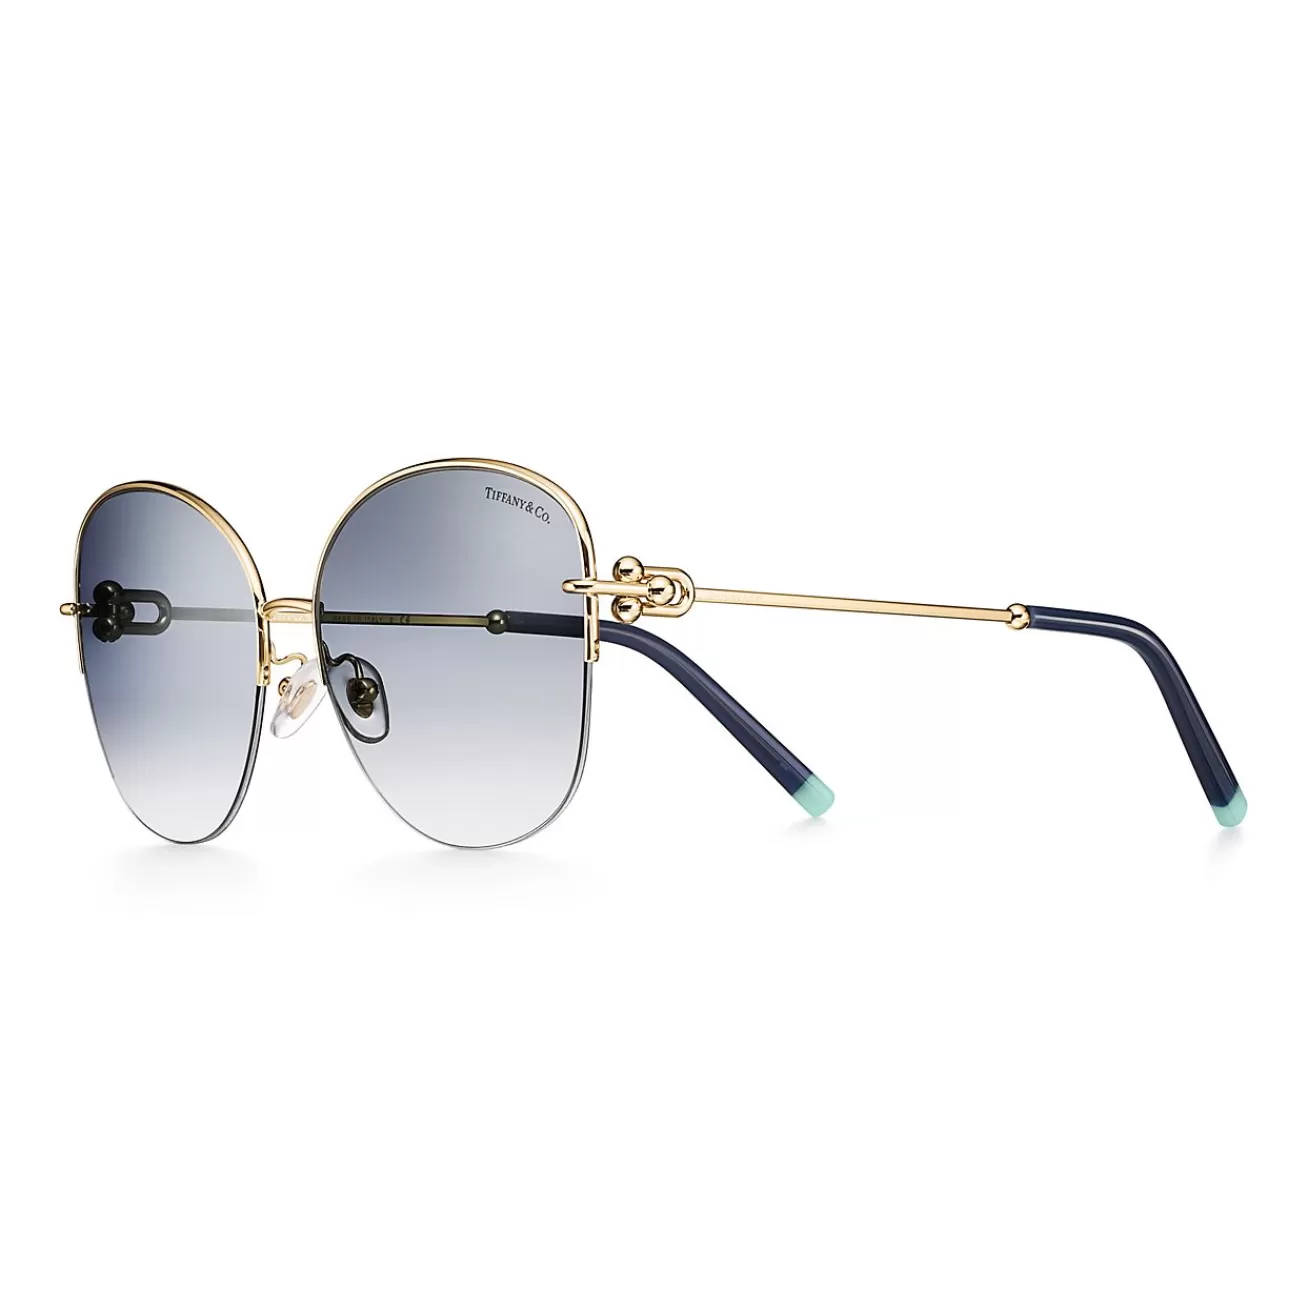 Tiffany & Co. Tiffany HardWear Sunglasses in Pale Gold-colored Metal with Blue Lenses | ^ Tiffany HardWear | Sunglasses